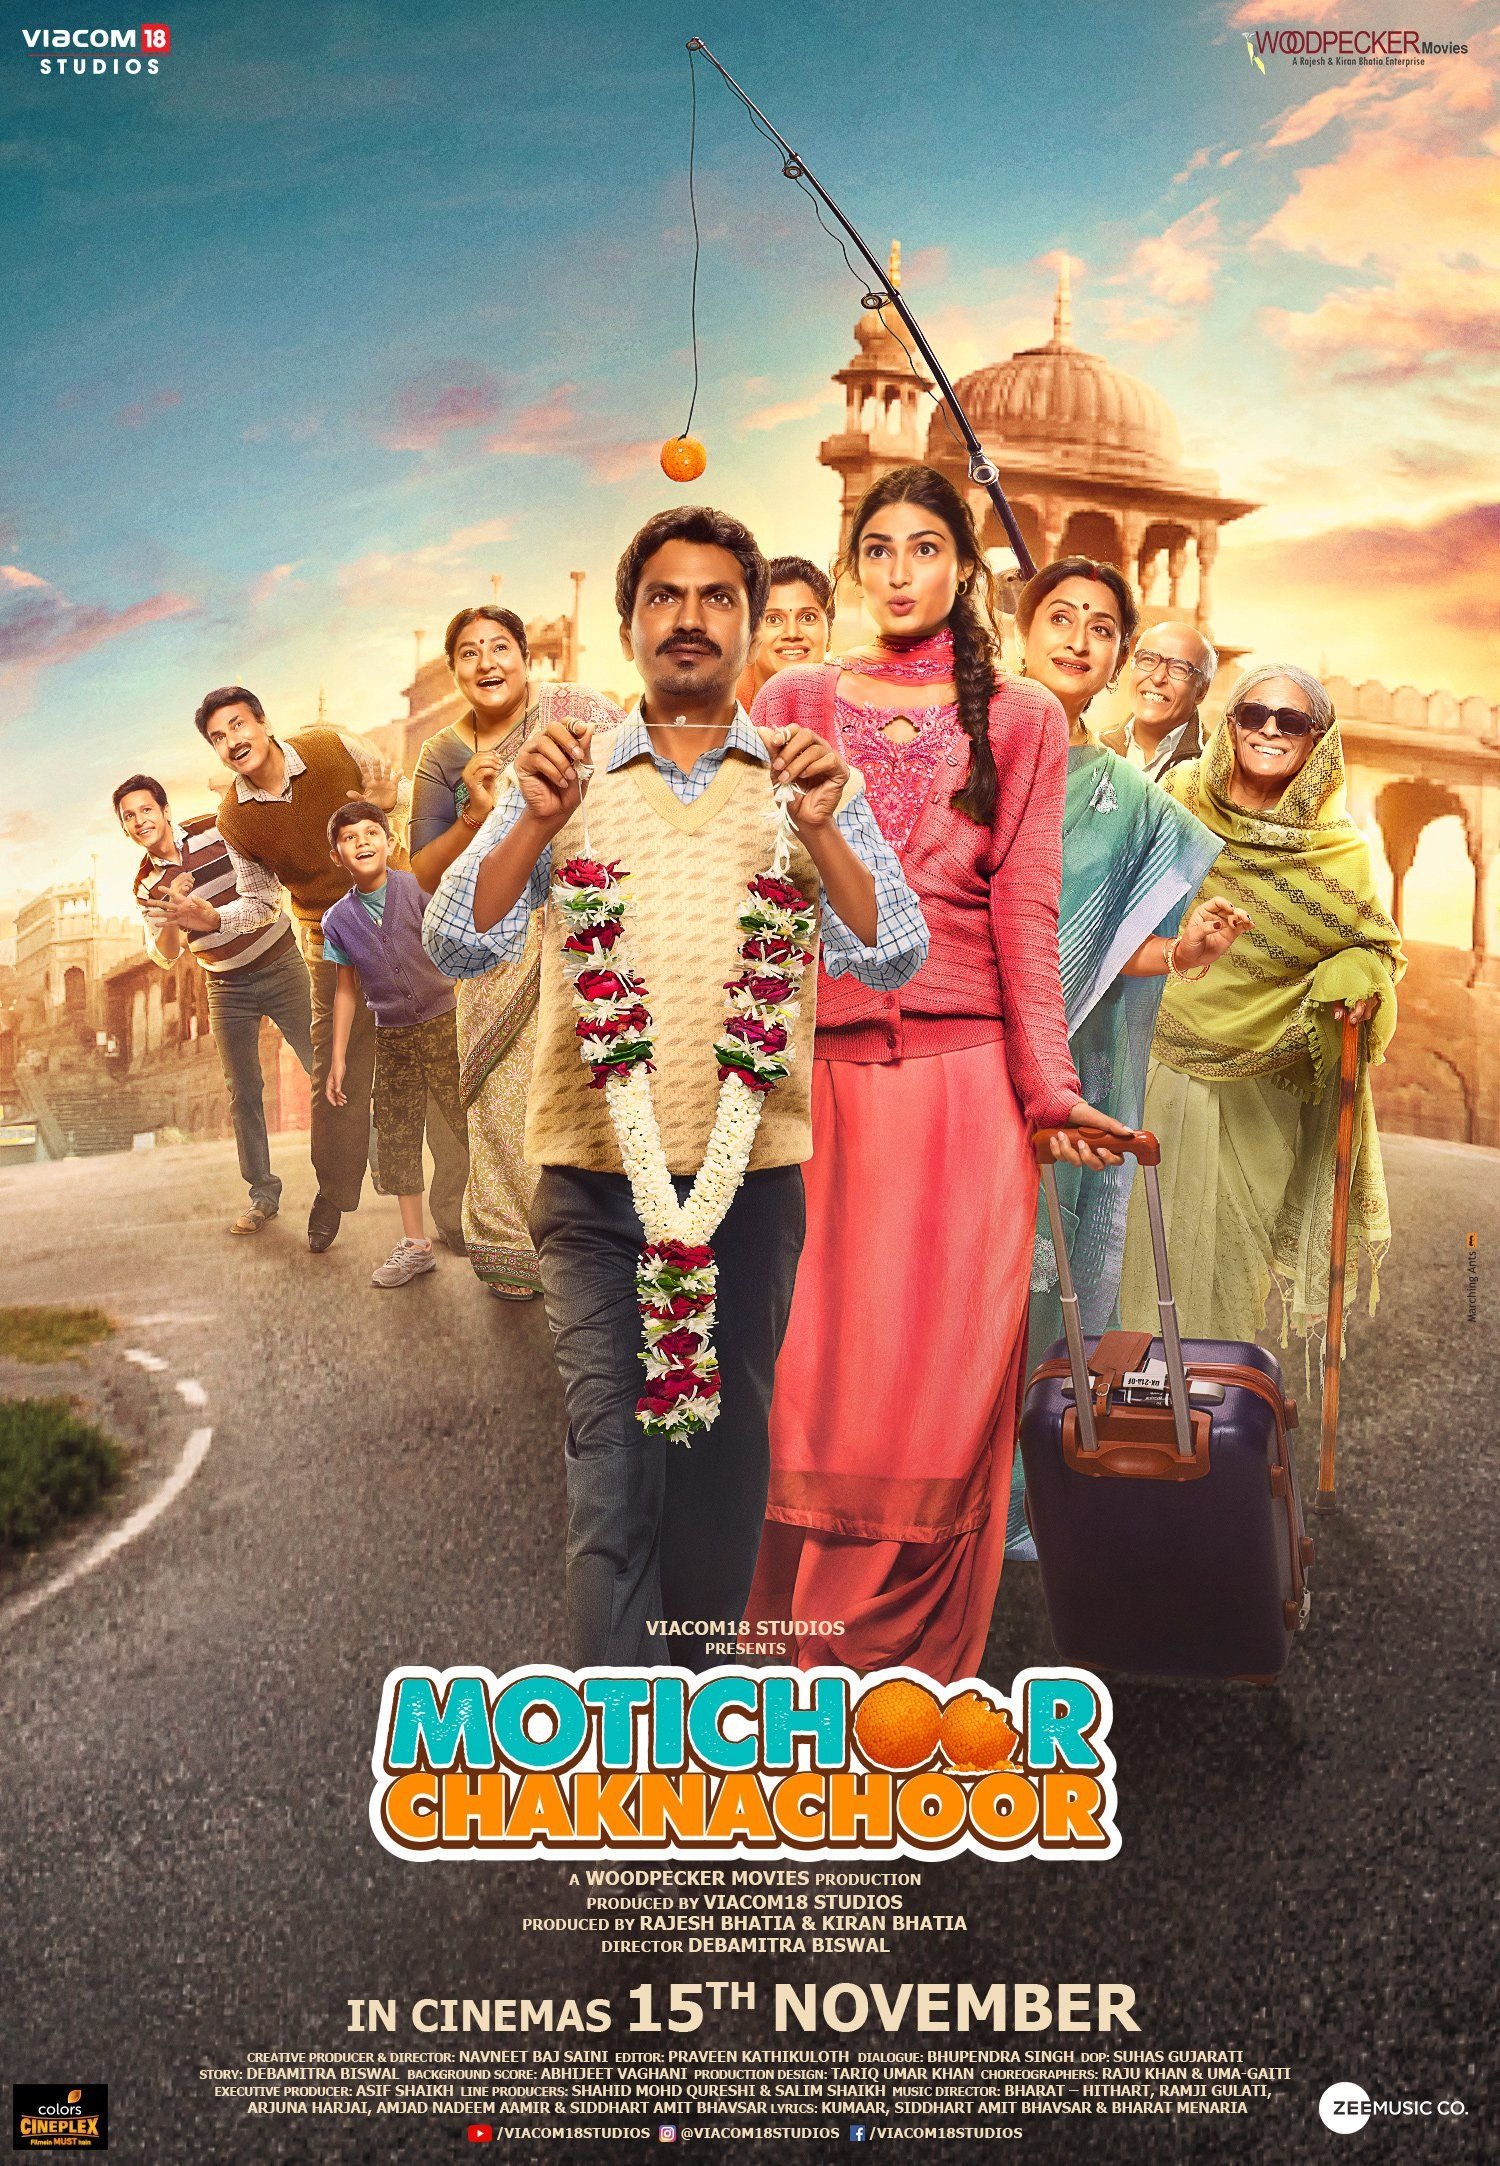 Mega Sized Movie Poster Image for Motichoor Chaknachoor (#4 of 4)